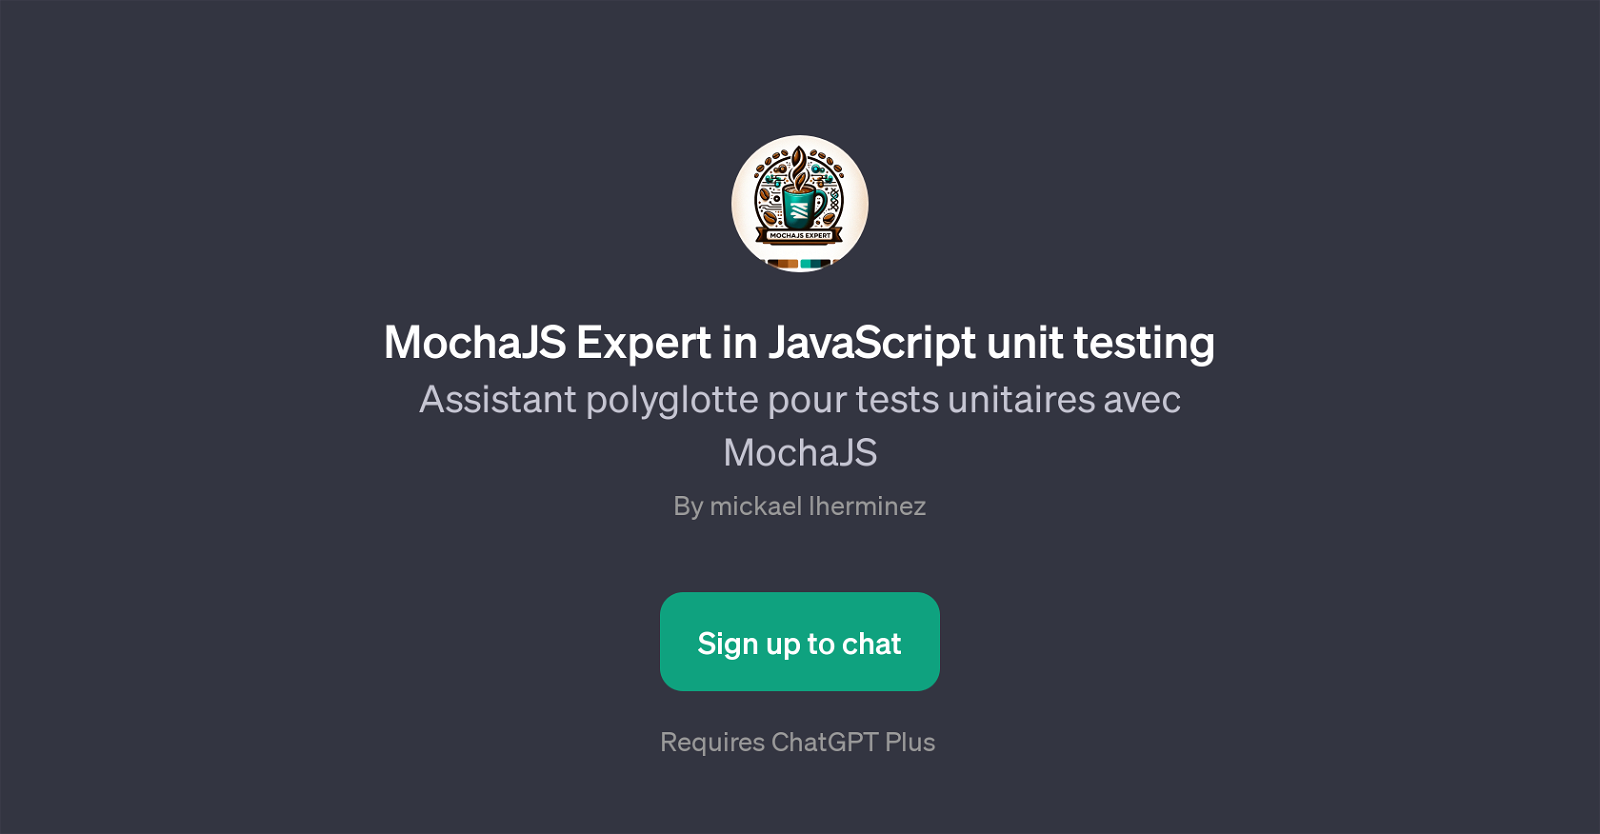 MochaJS Expert in JavaScript unit testing website